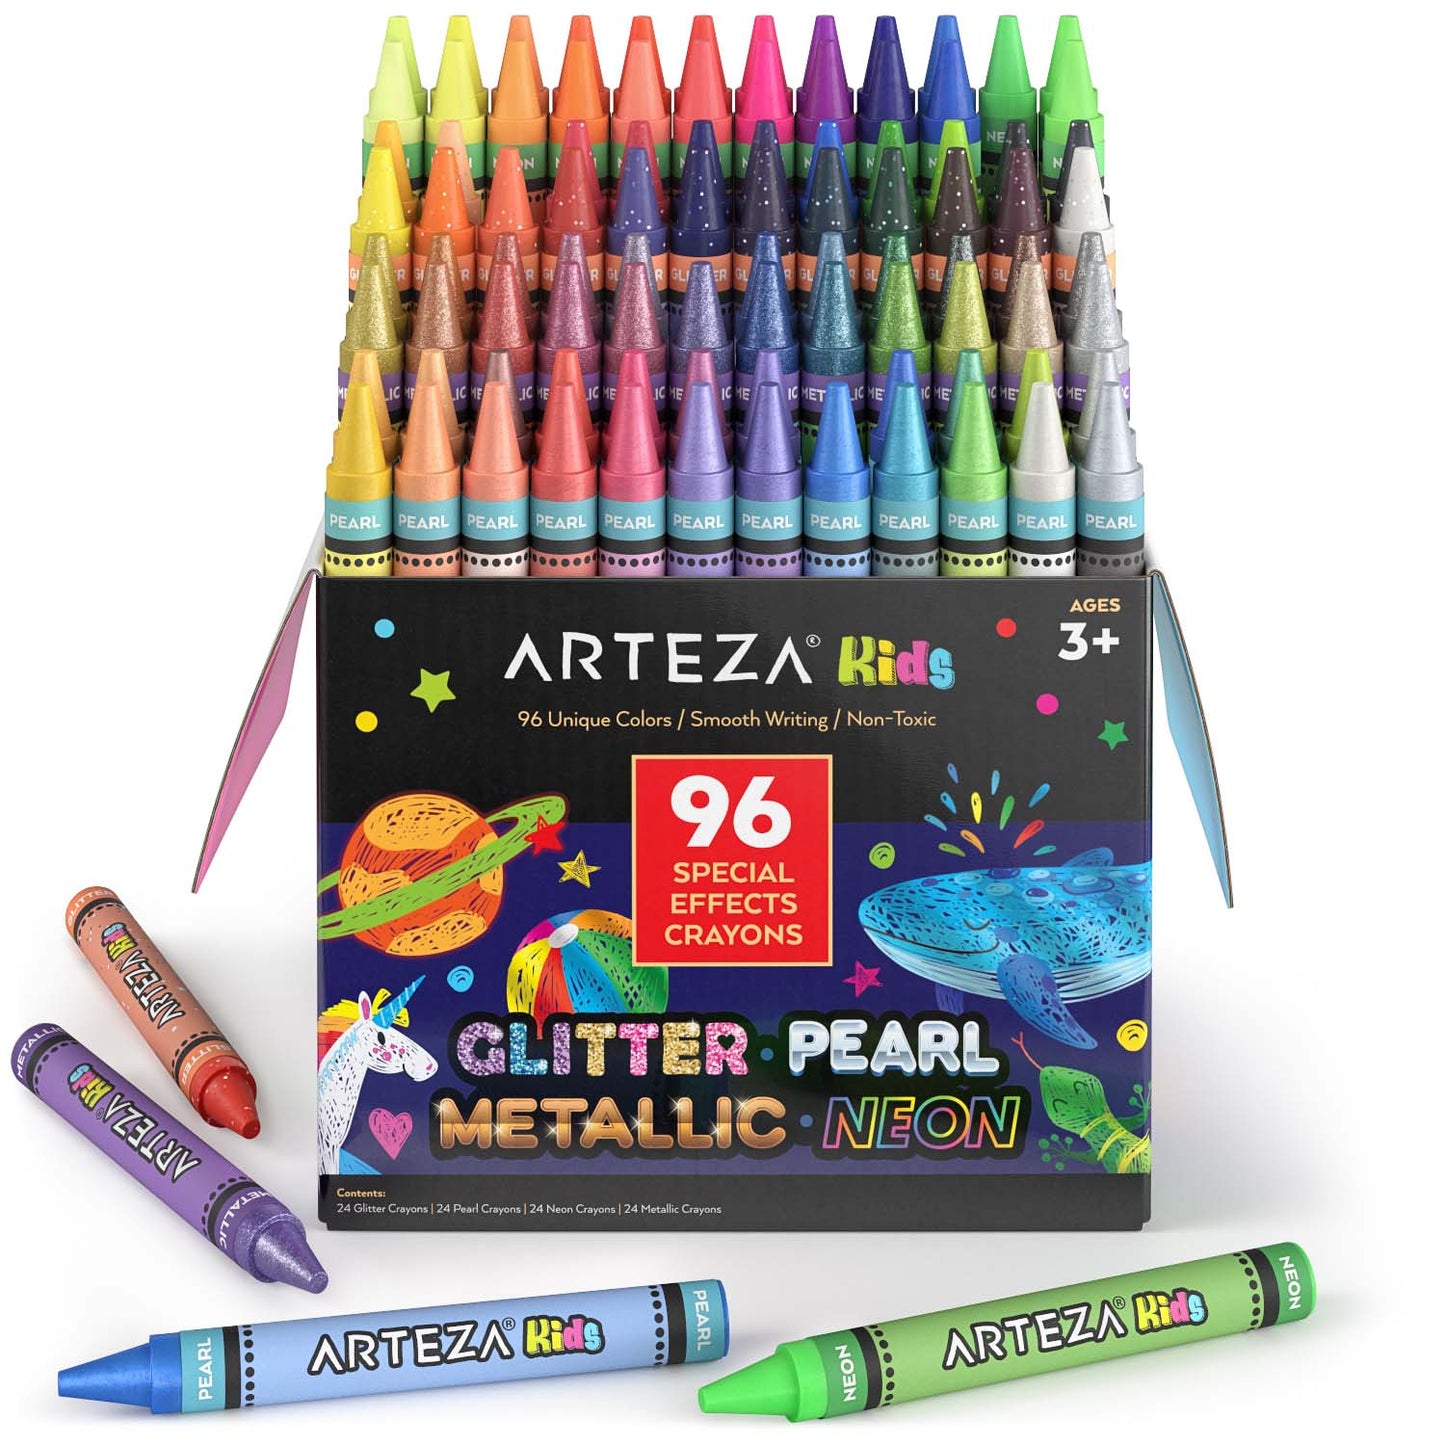 Metallic Crayons